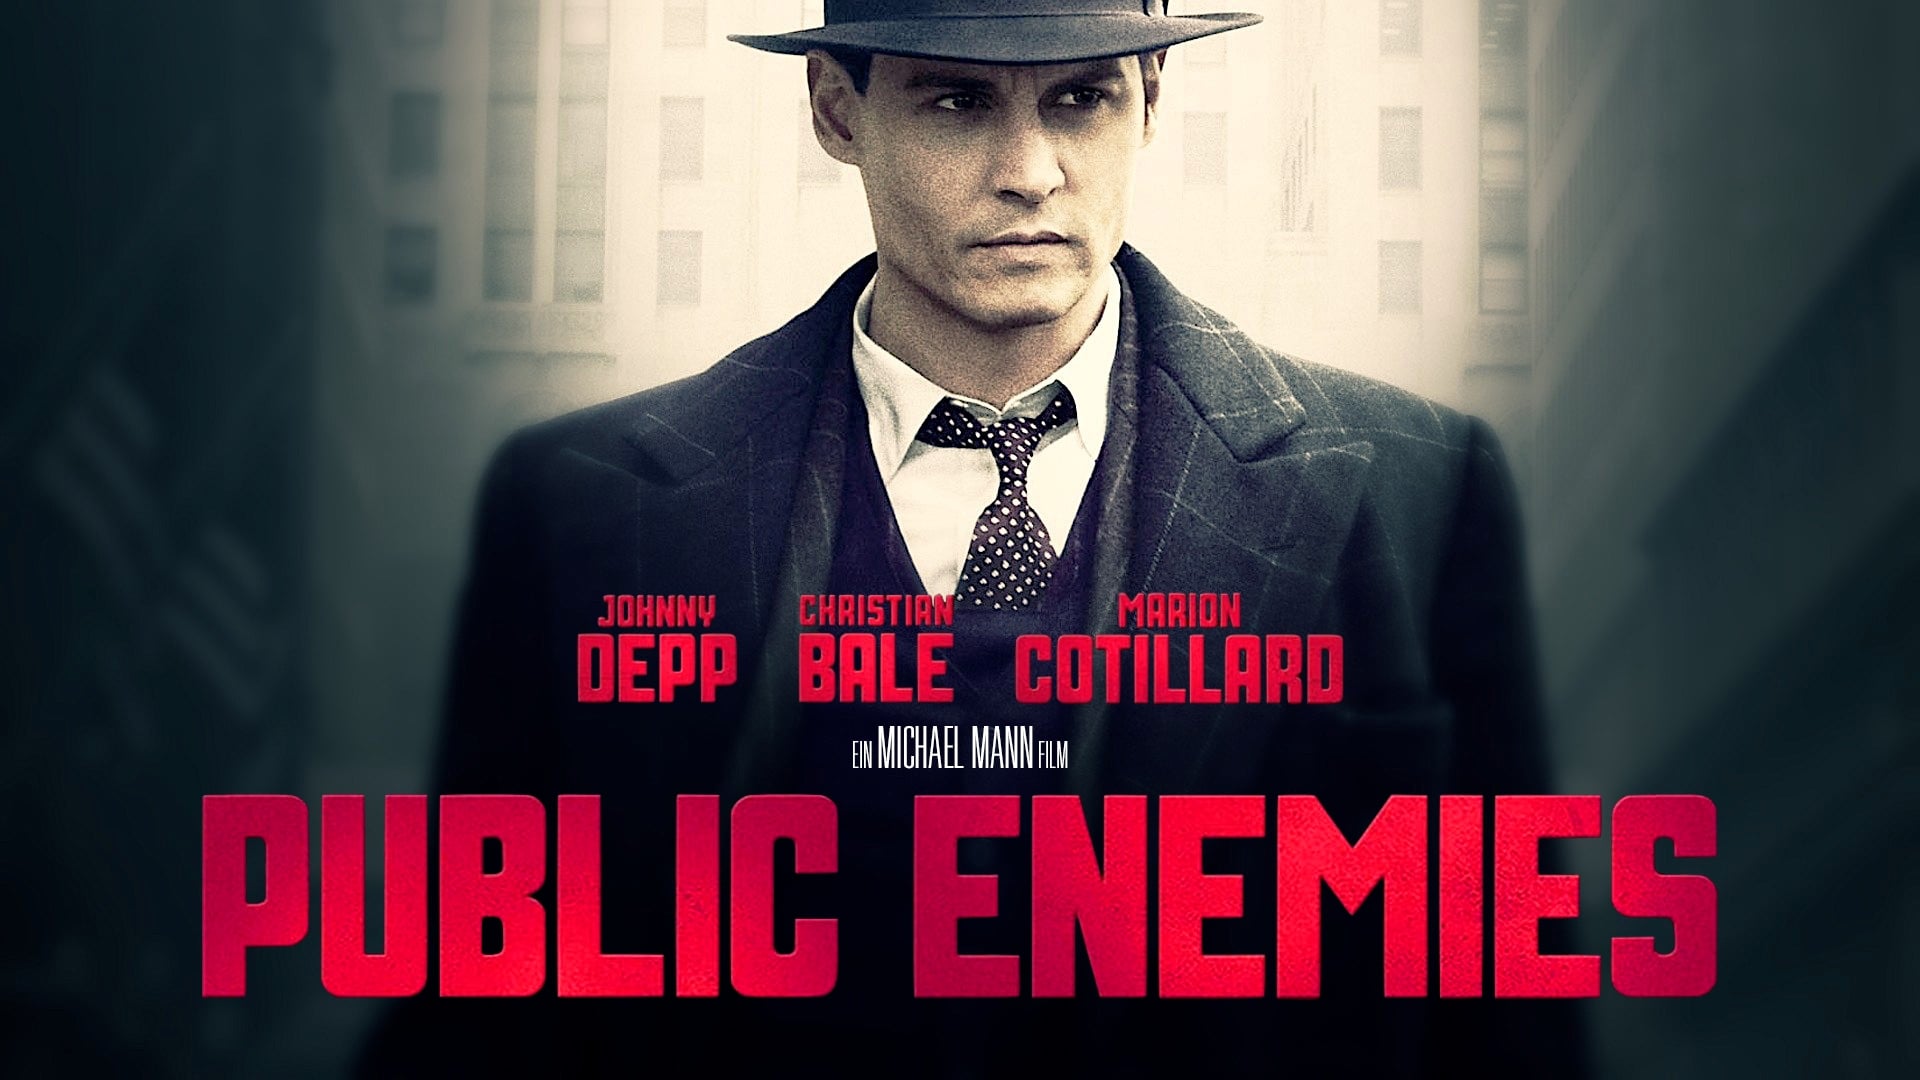 movie Public online free enemies